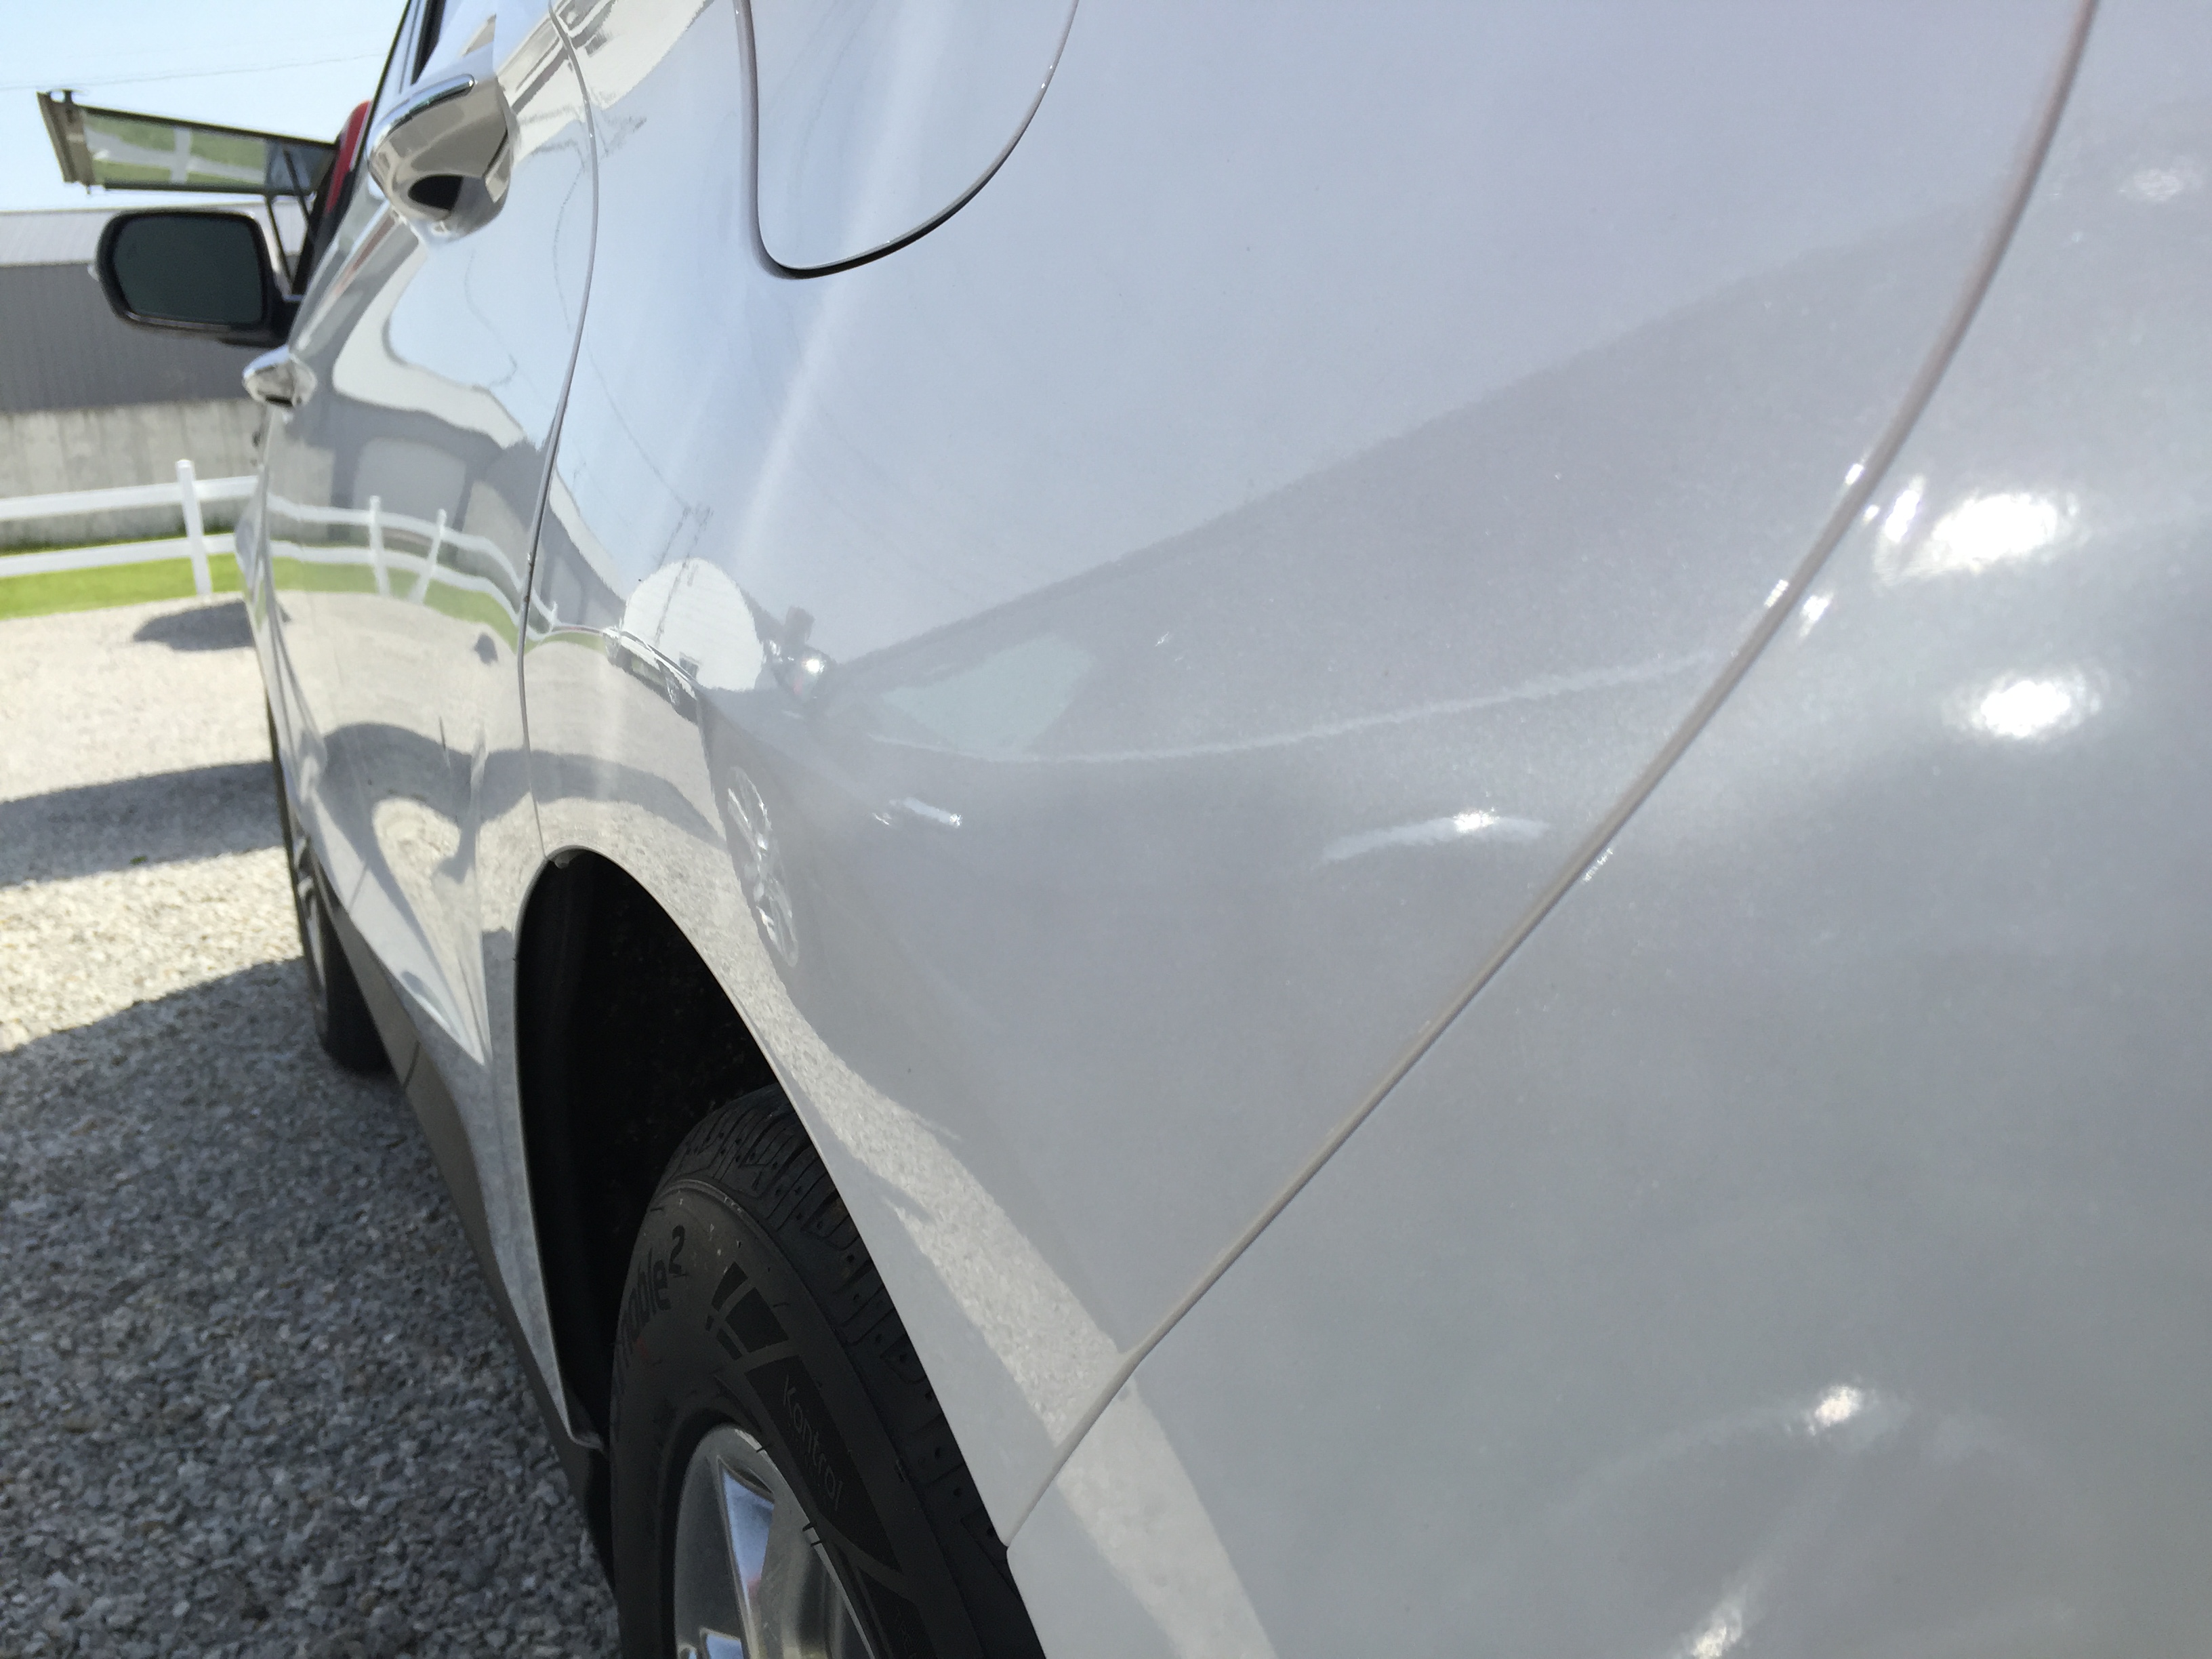 Springfield Dent Repair, Dent Removal, Hail Repair, 2015 Ford Edge Body Line Dent, Repair in Springfield IL, http://217dent.com